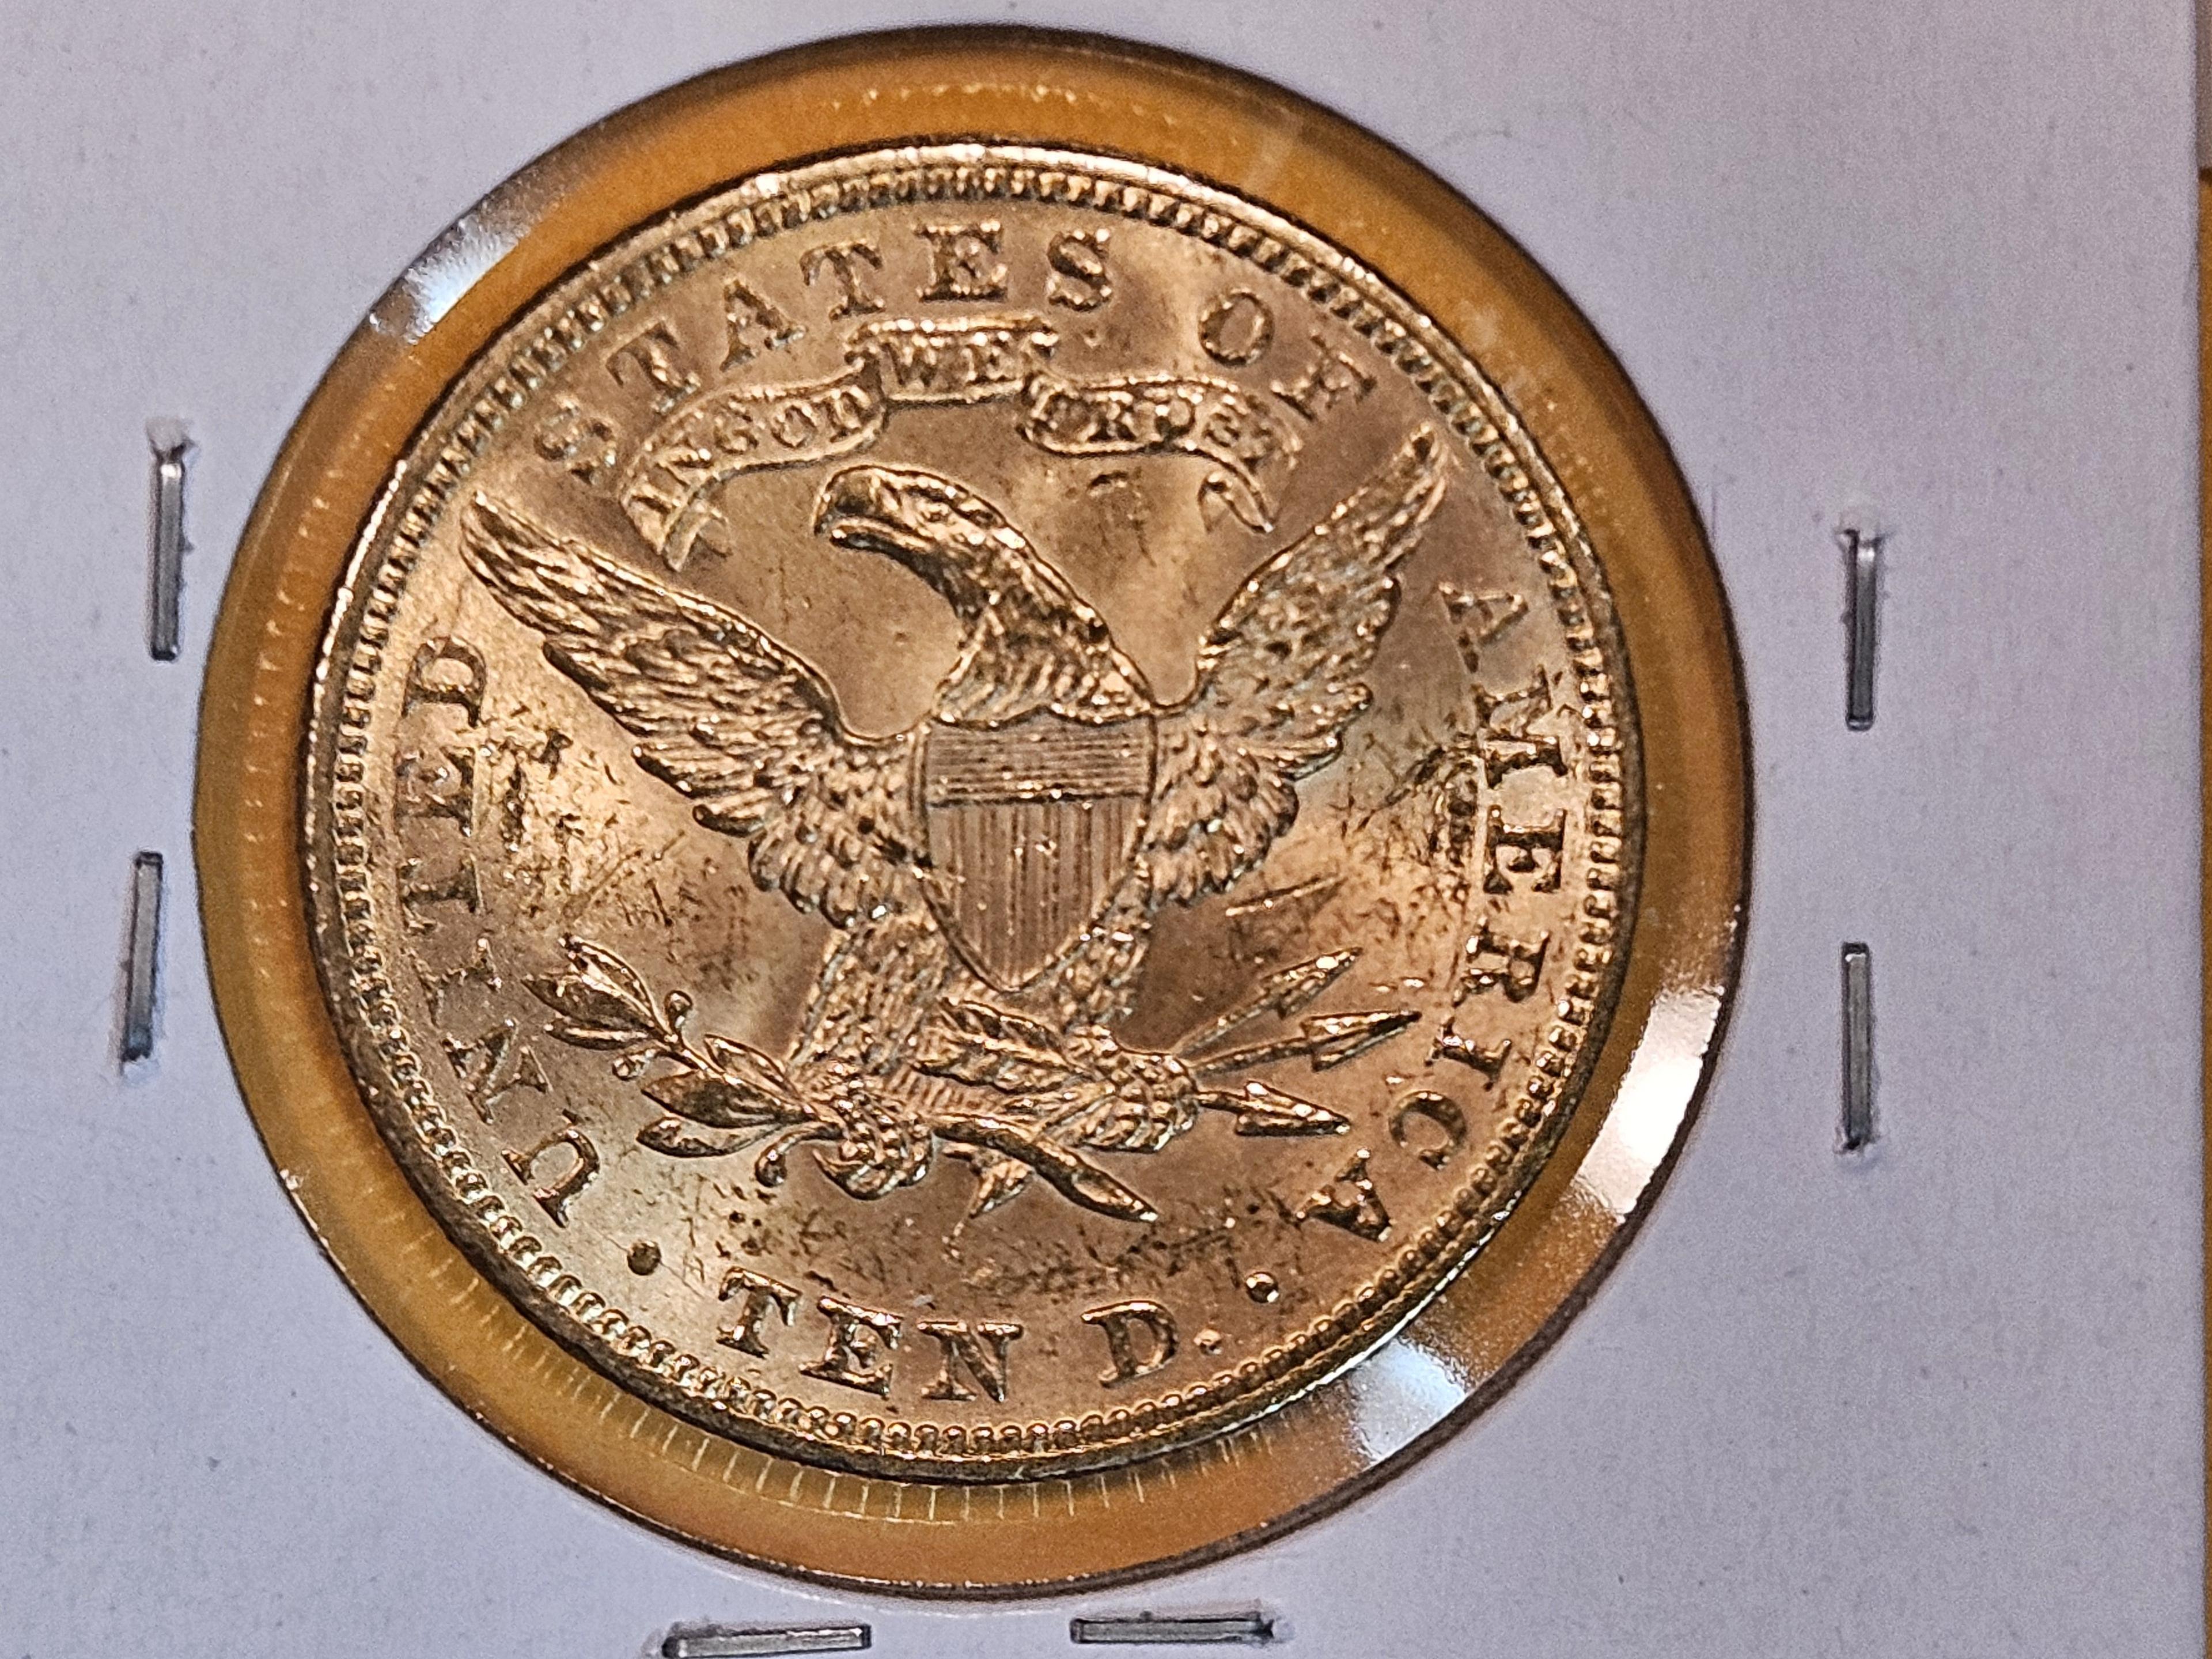 GOLD! Brilliant Uncircualted 1894 Gold Liberty head Ten Dollars